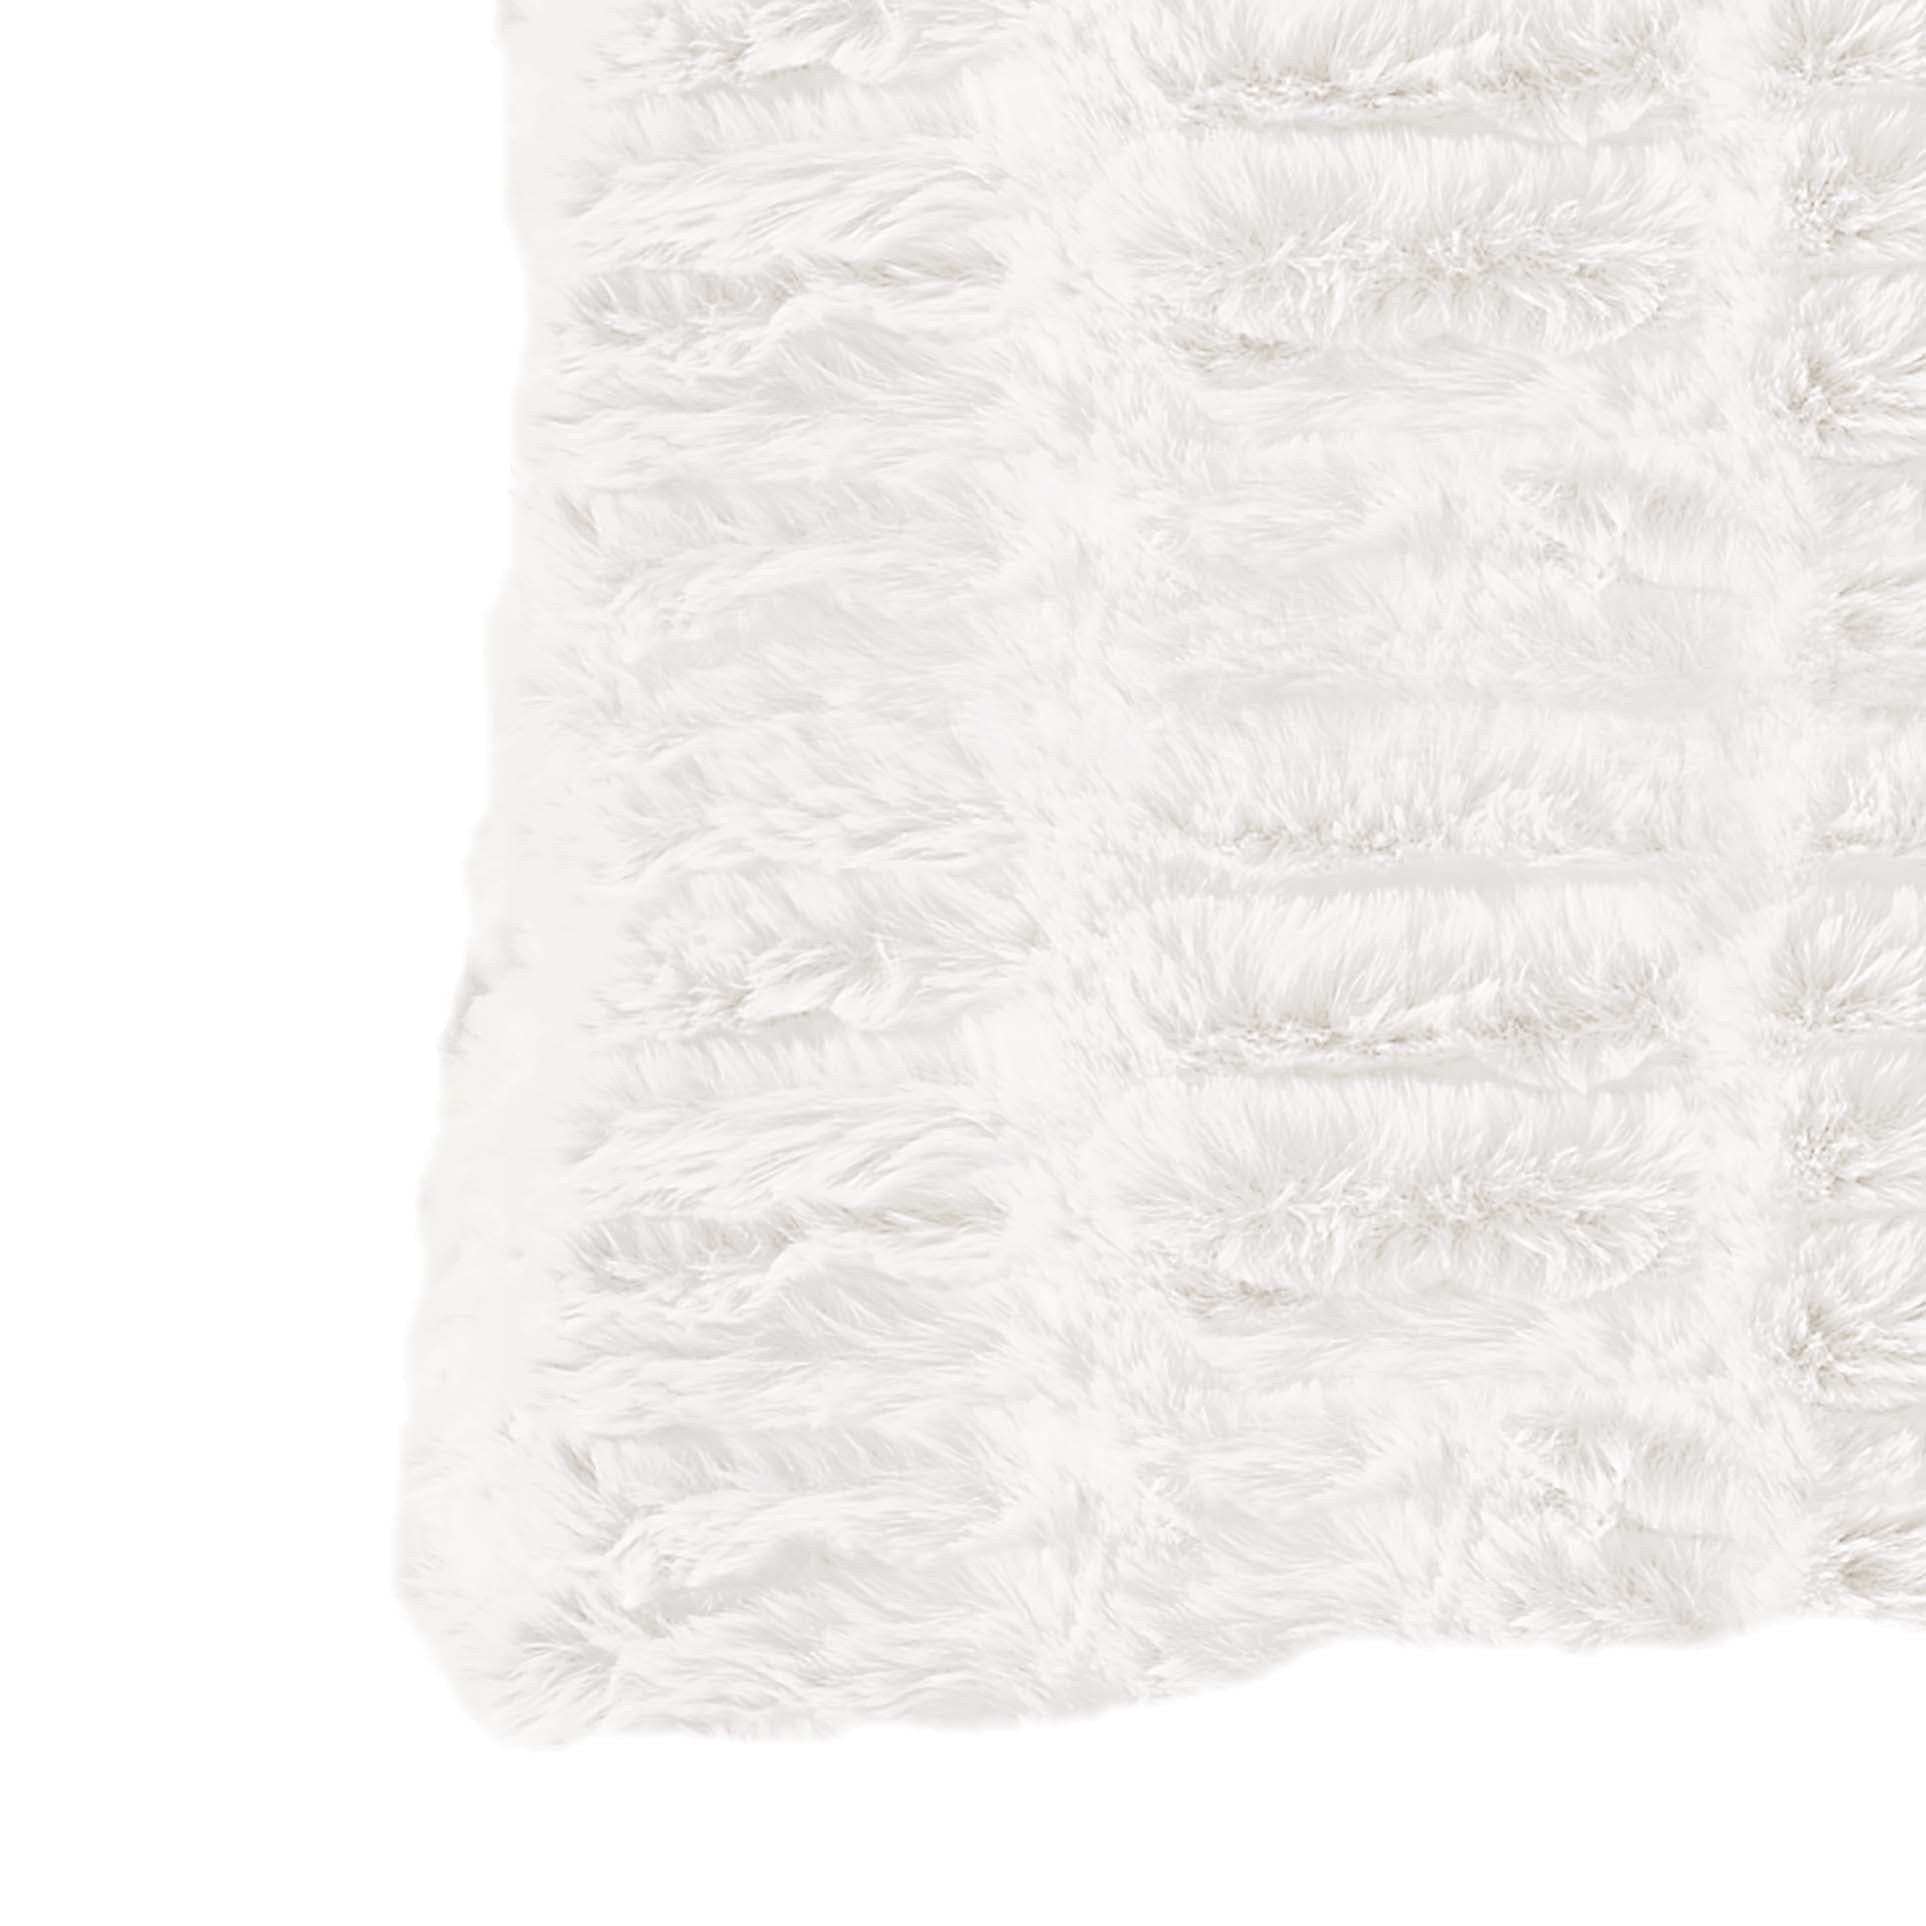 Mellowdy  Faux Rabbit Fur Decorative Throw Pillow Covers